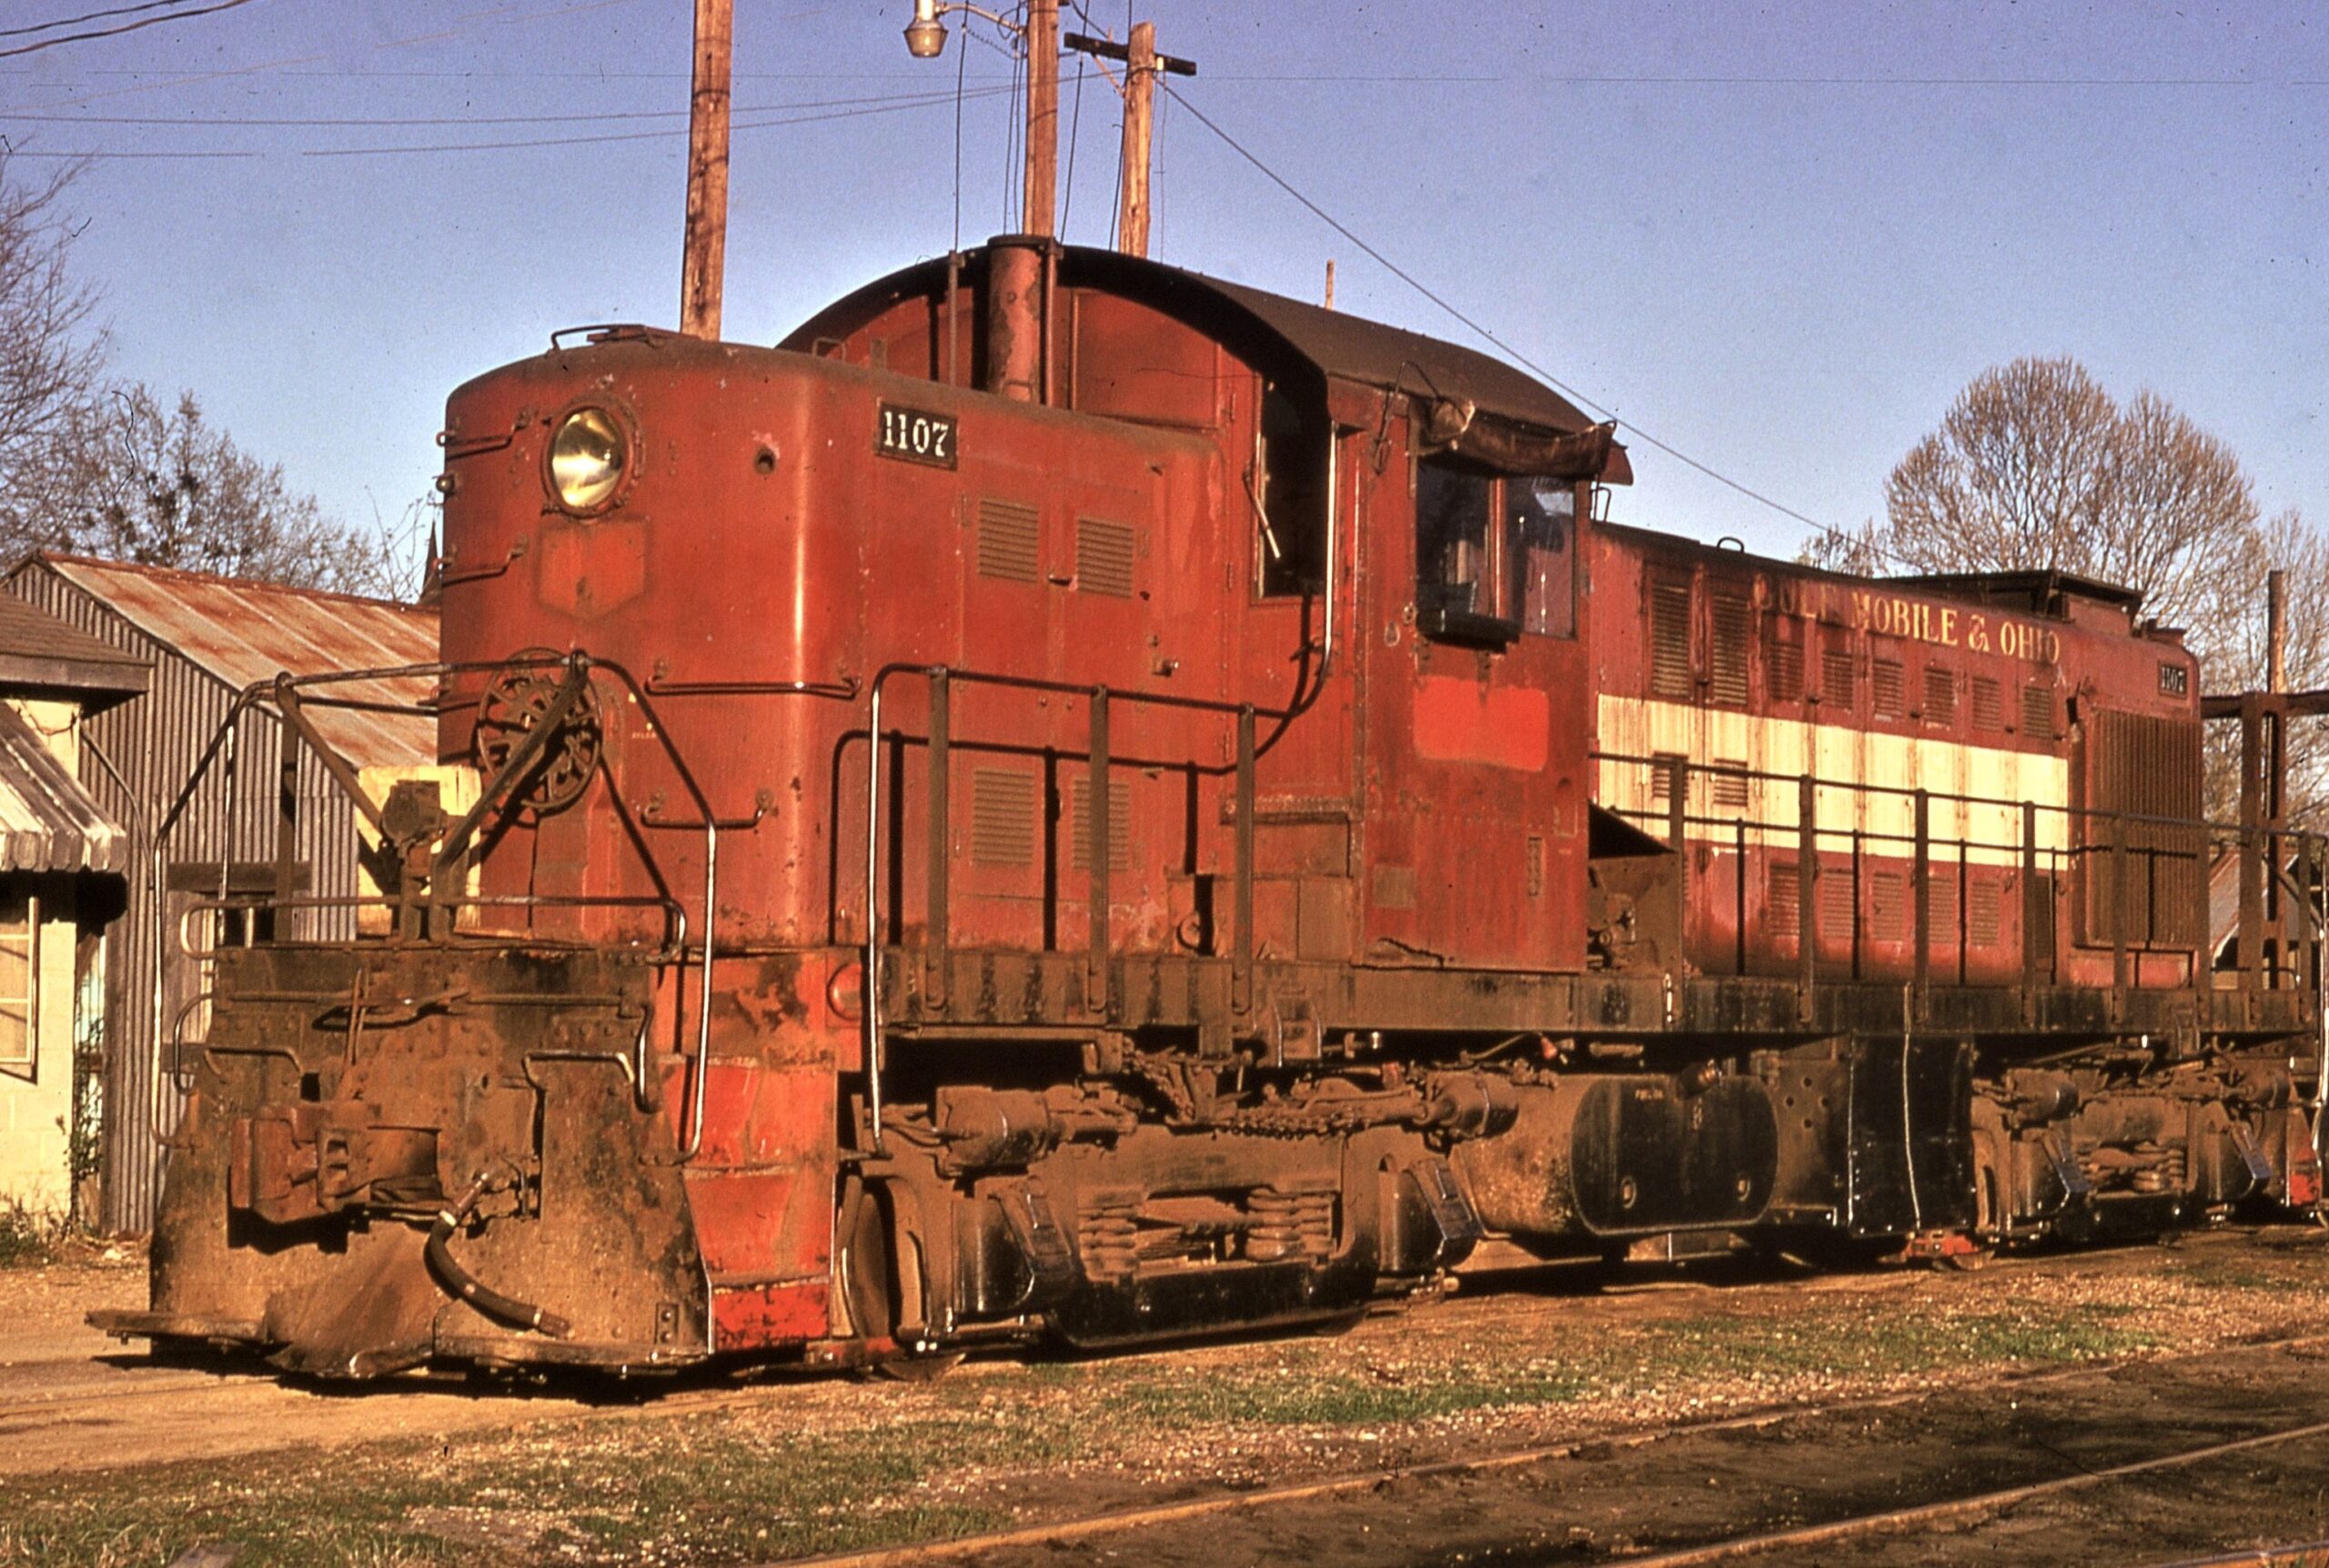 Louisiana Midland | Vena, Louisiana | Class RS1 #1107 diesel-electric locomotive | ex-gulf, Mobile & Ohio #351 | oarch 1975 | R.R. Wallin photograph | Elmer Kremkow collectipn